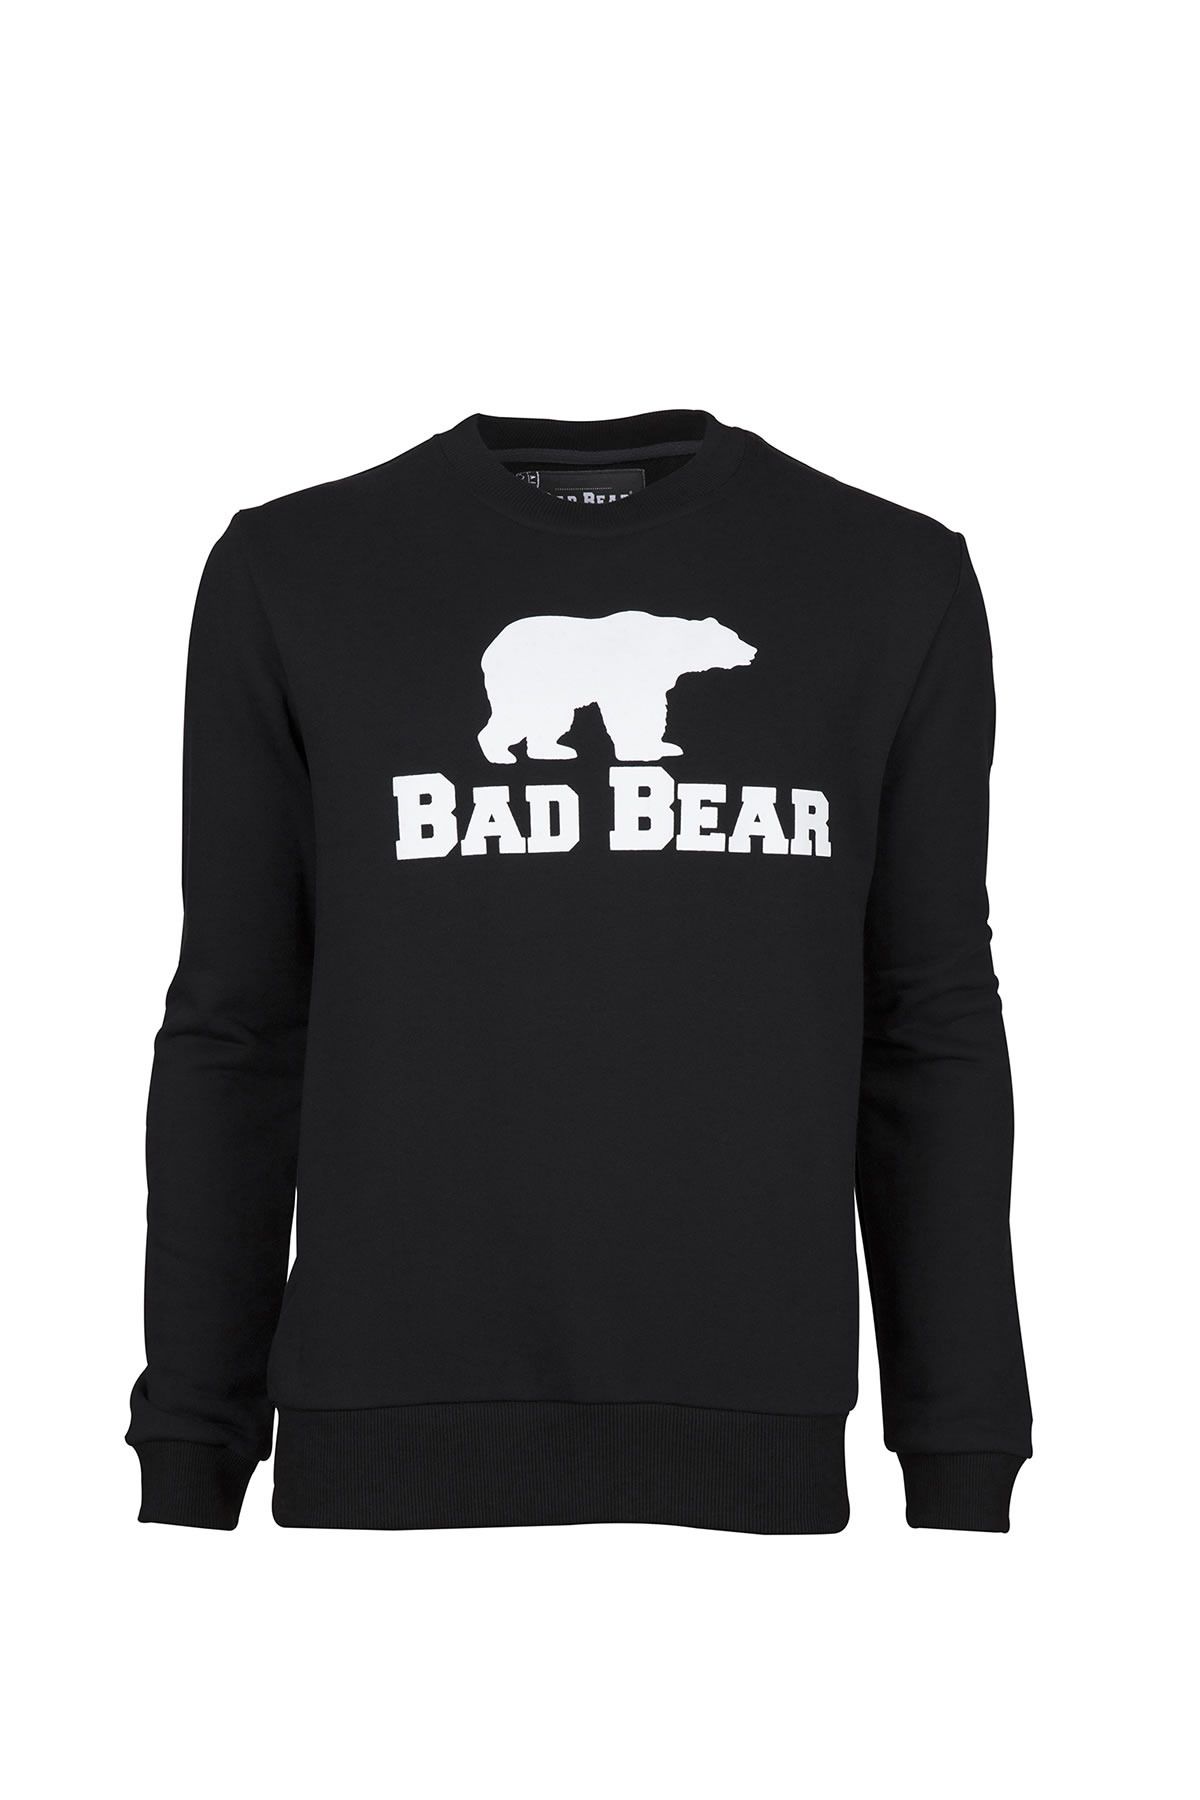 Bad Bear Crewneck Erkek Sweatshirt 20.02.12.011-c27